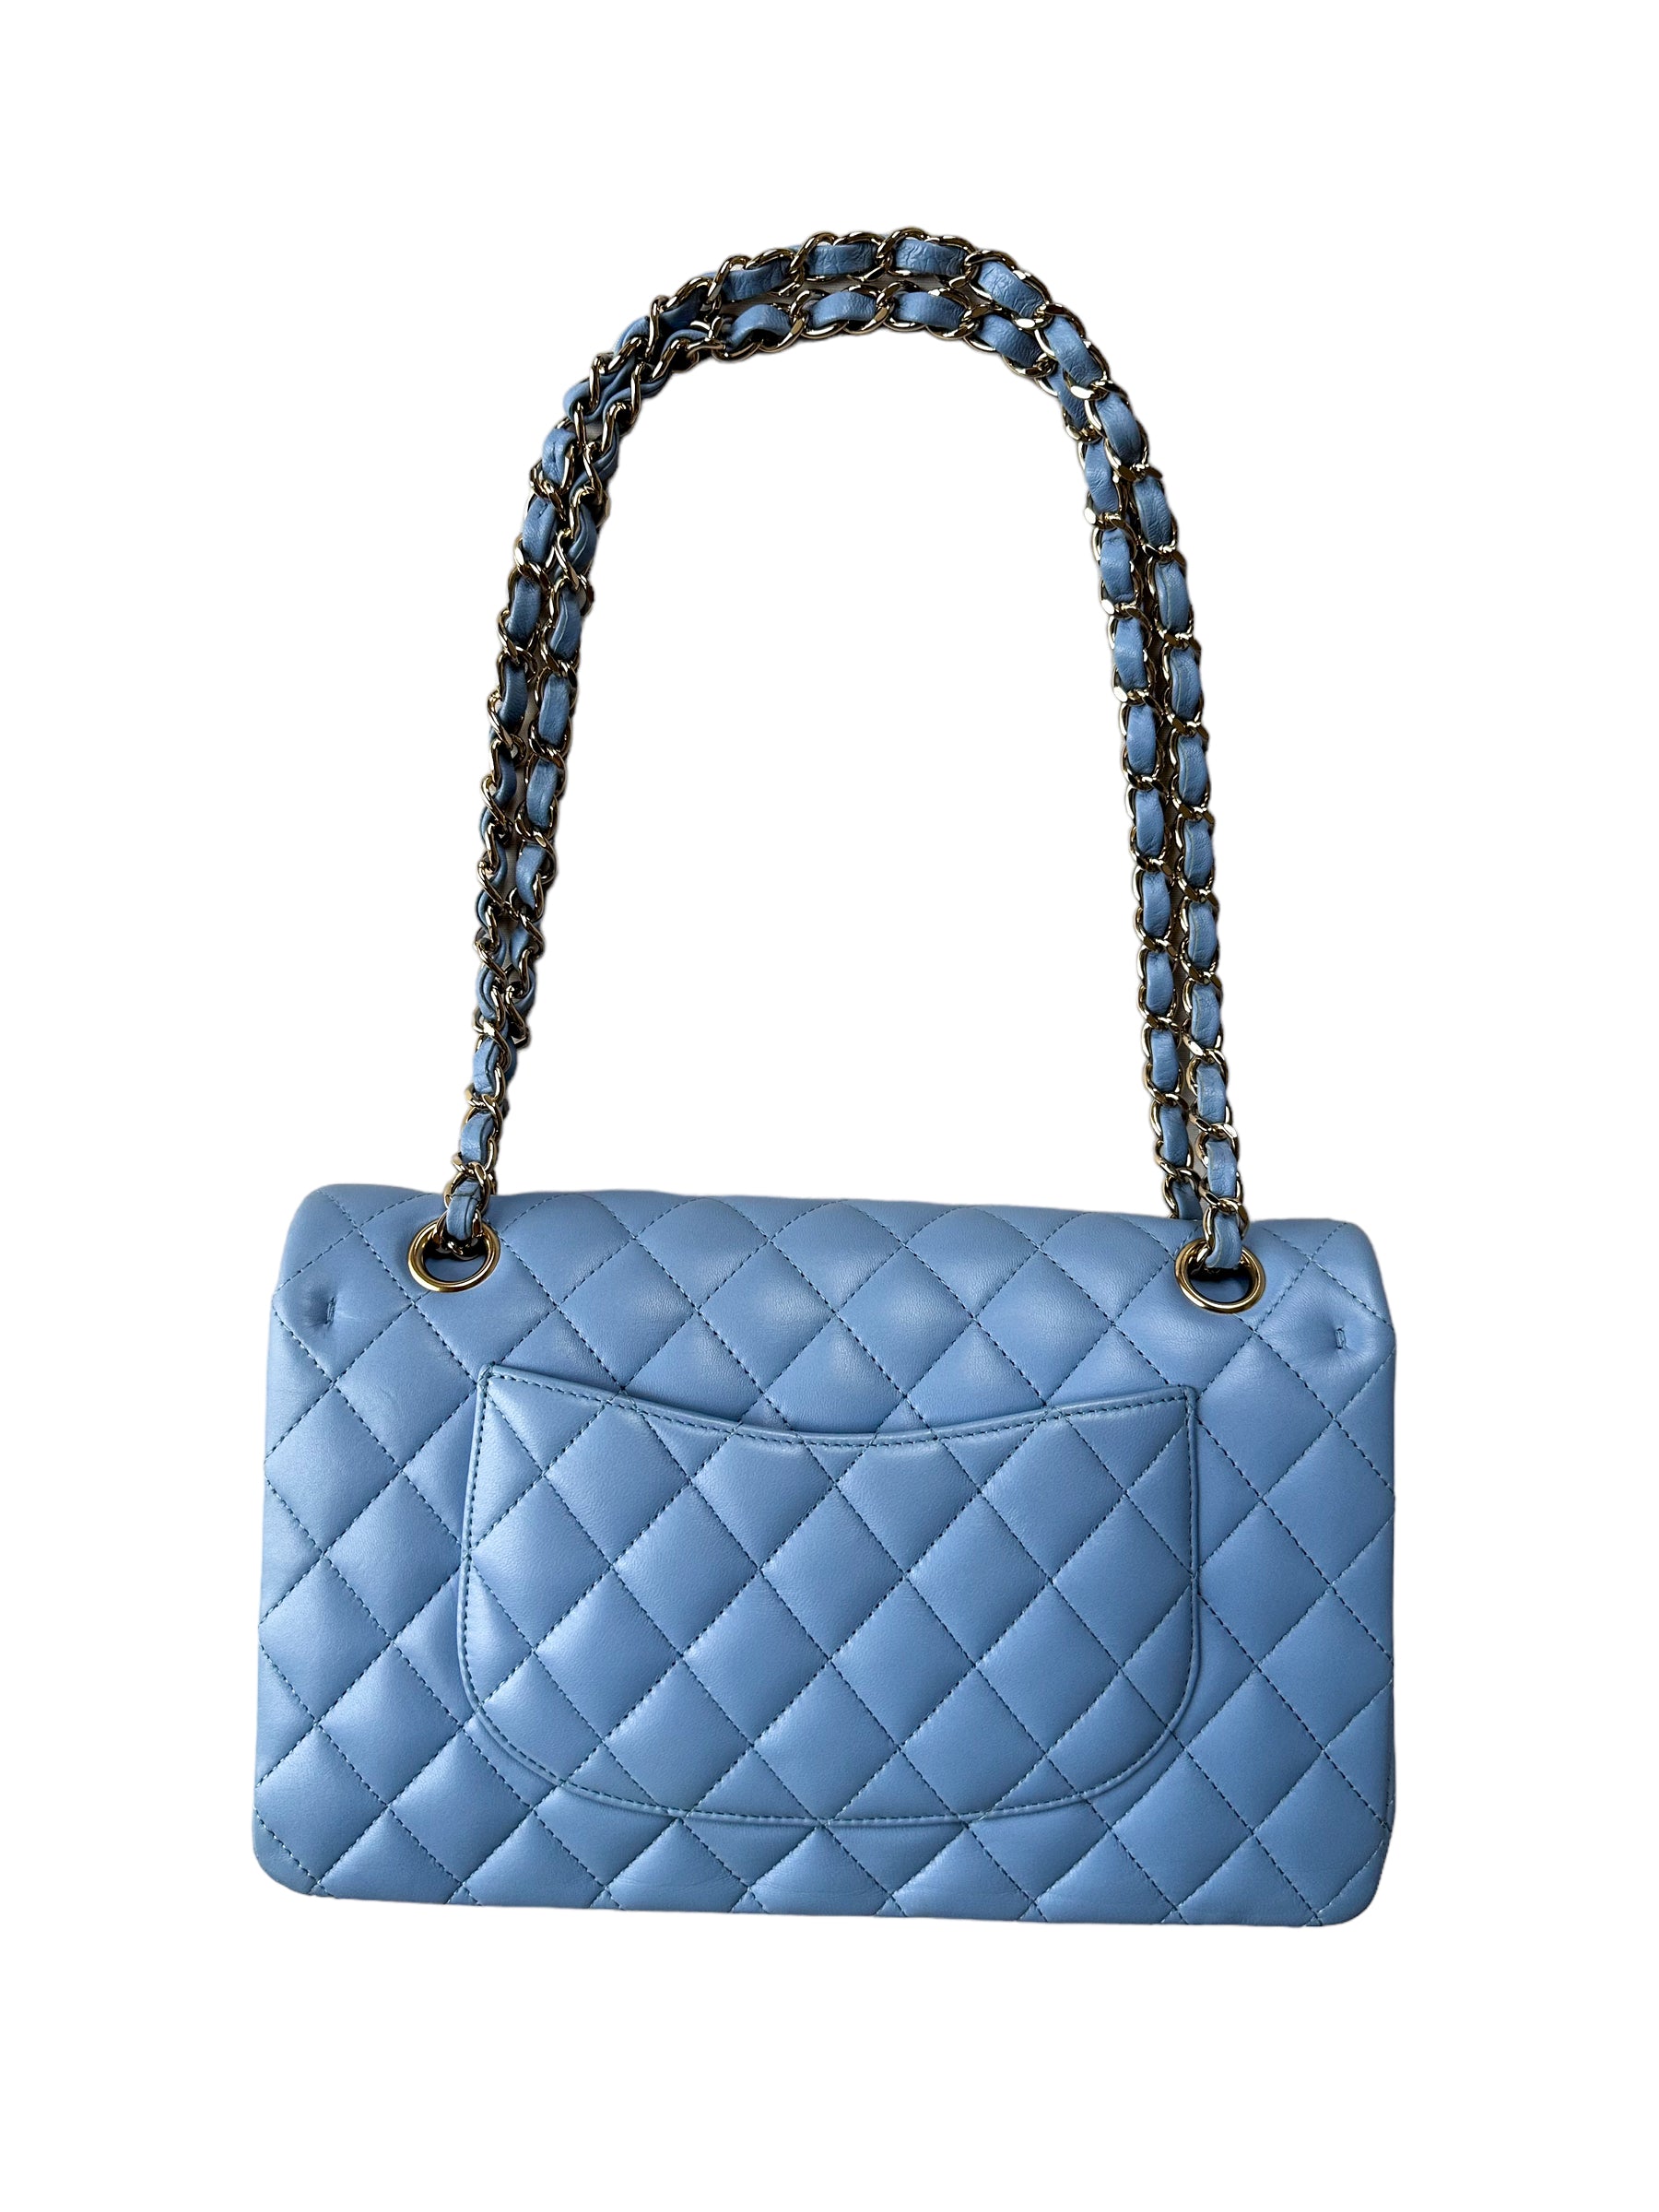 Chanel Baby Blue Lambskin Medium Double Flap Bag